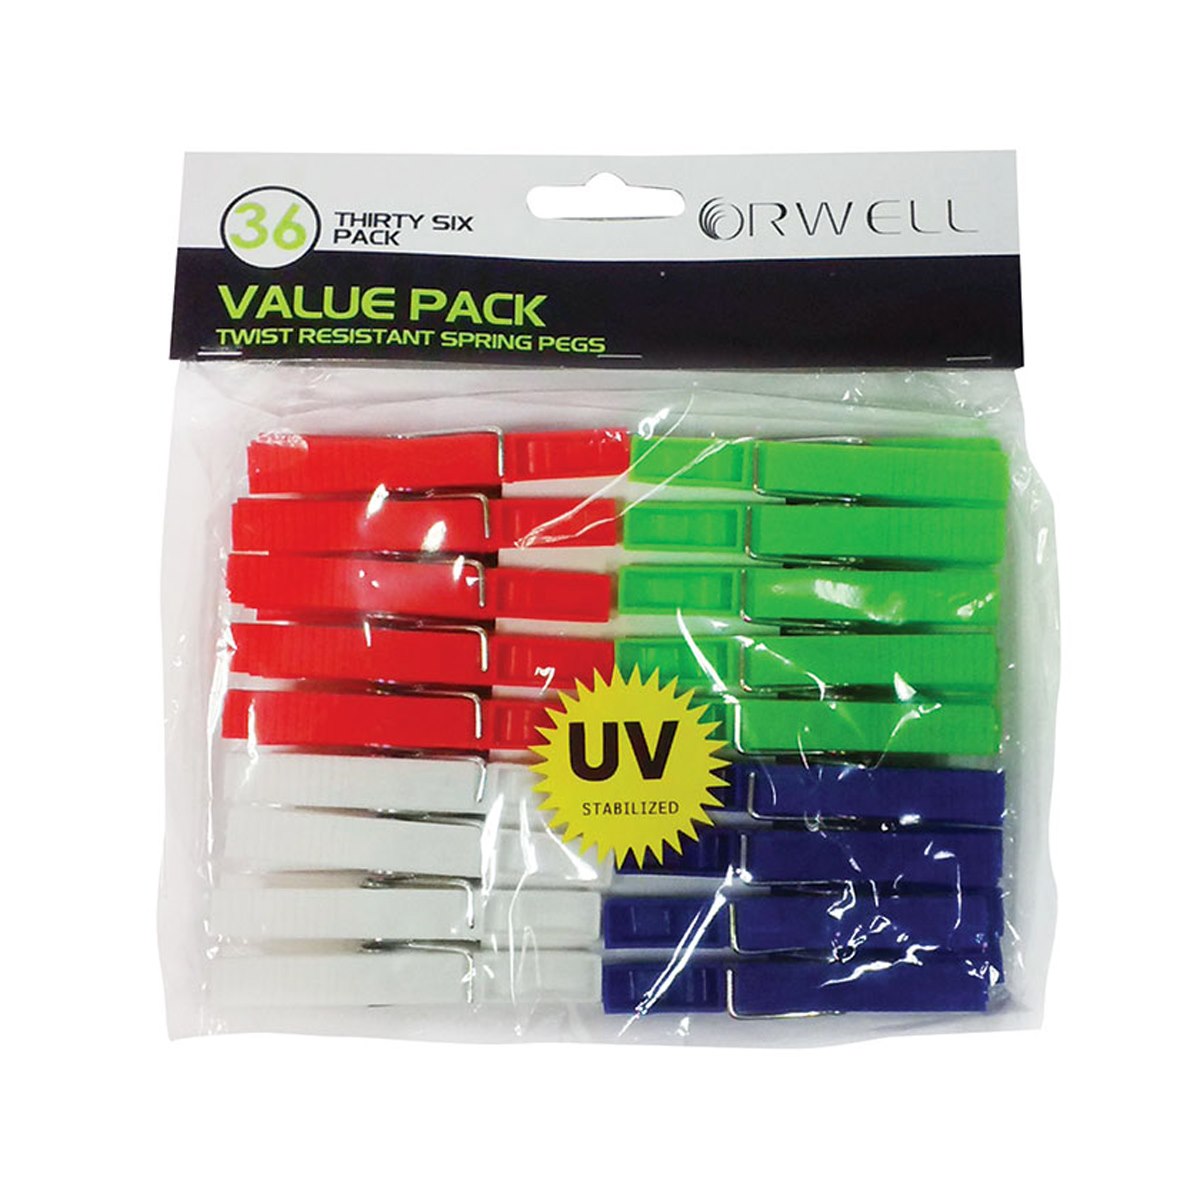 Orwell Twist Resistant Plastic Spring Pegs Value Pack of 36